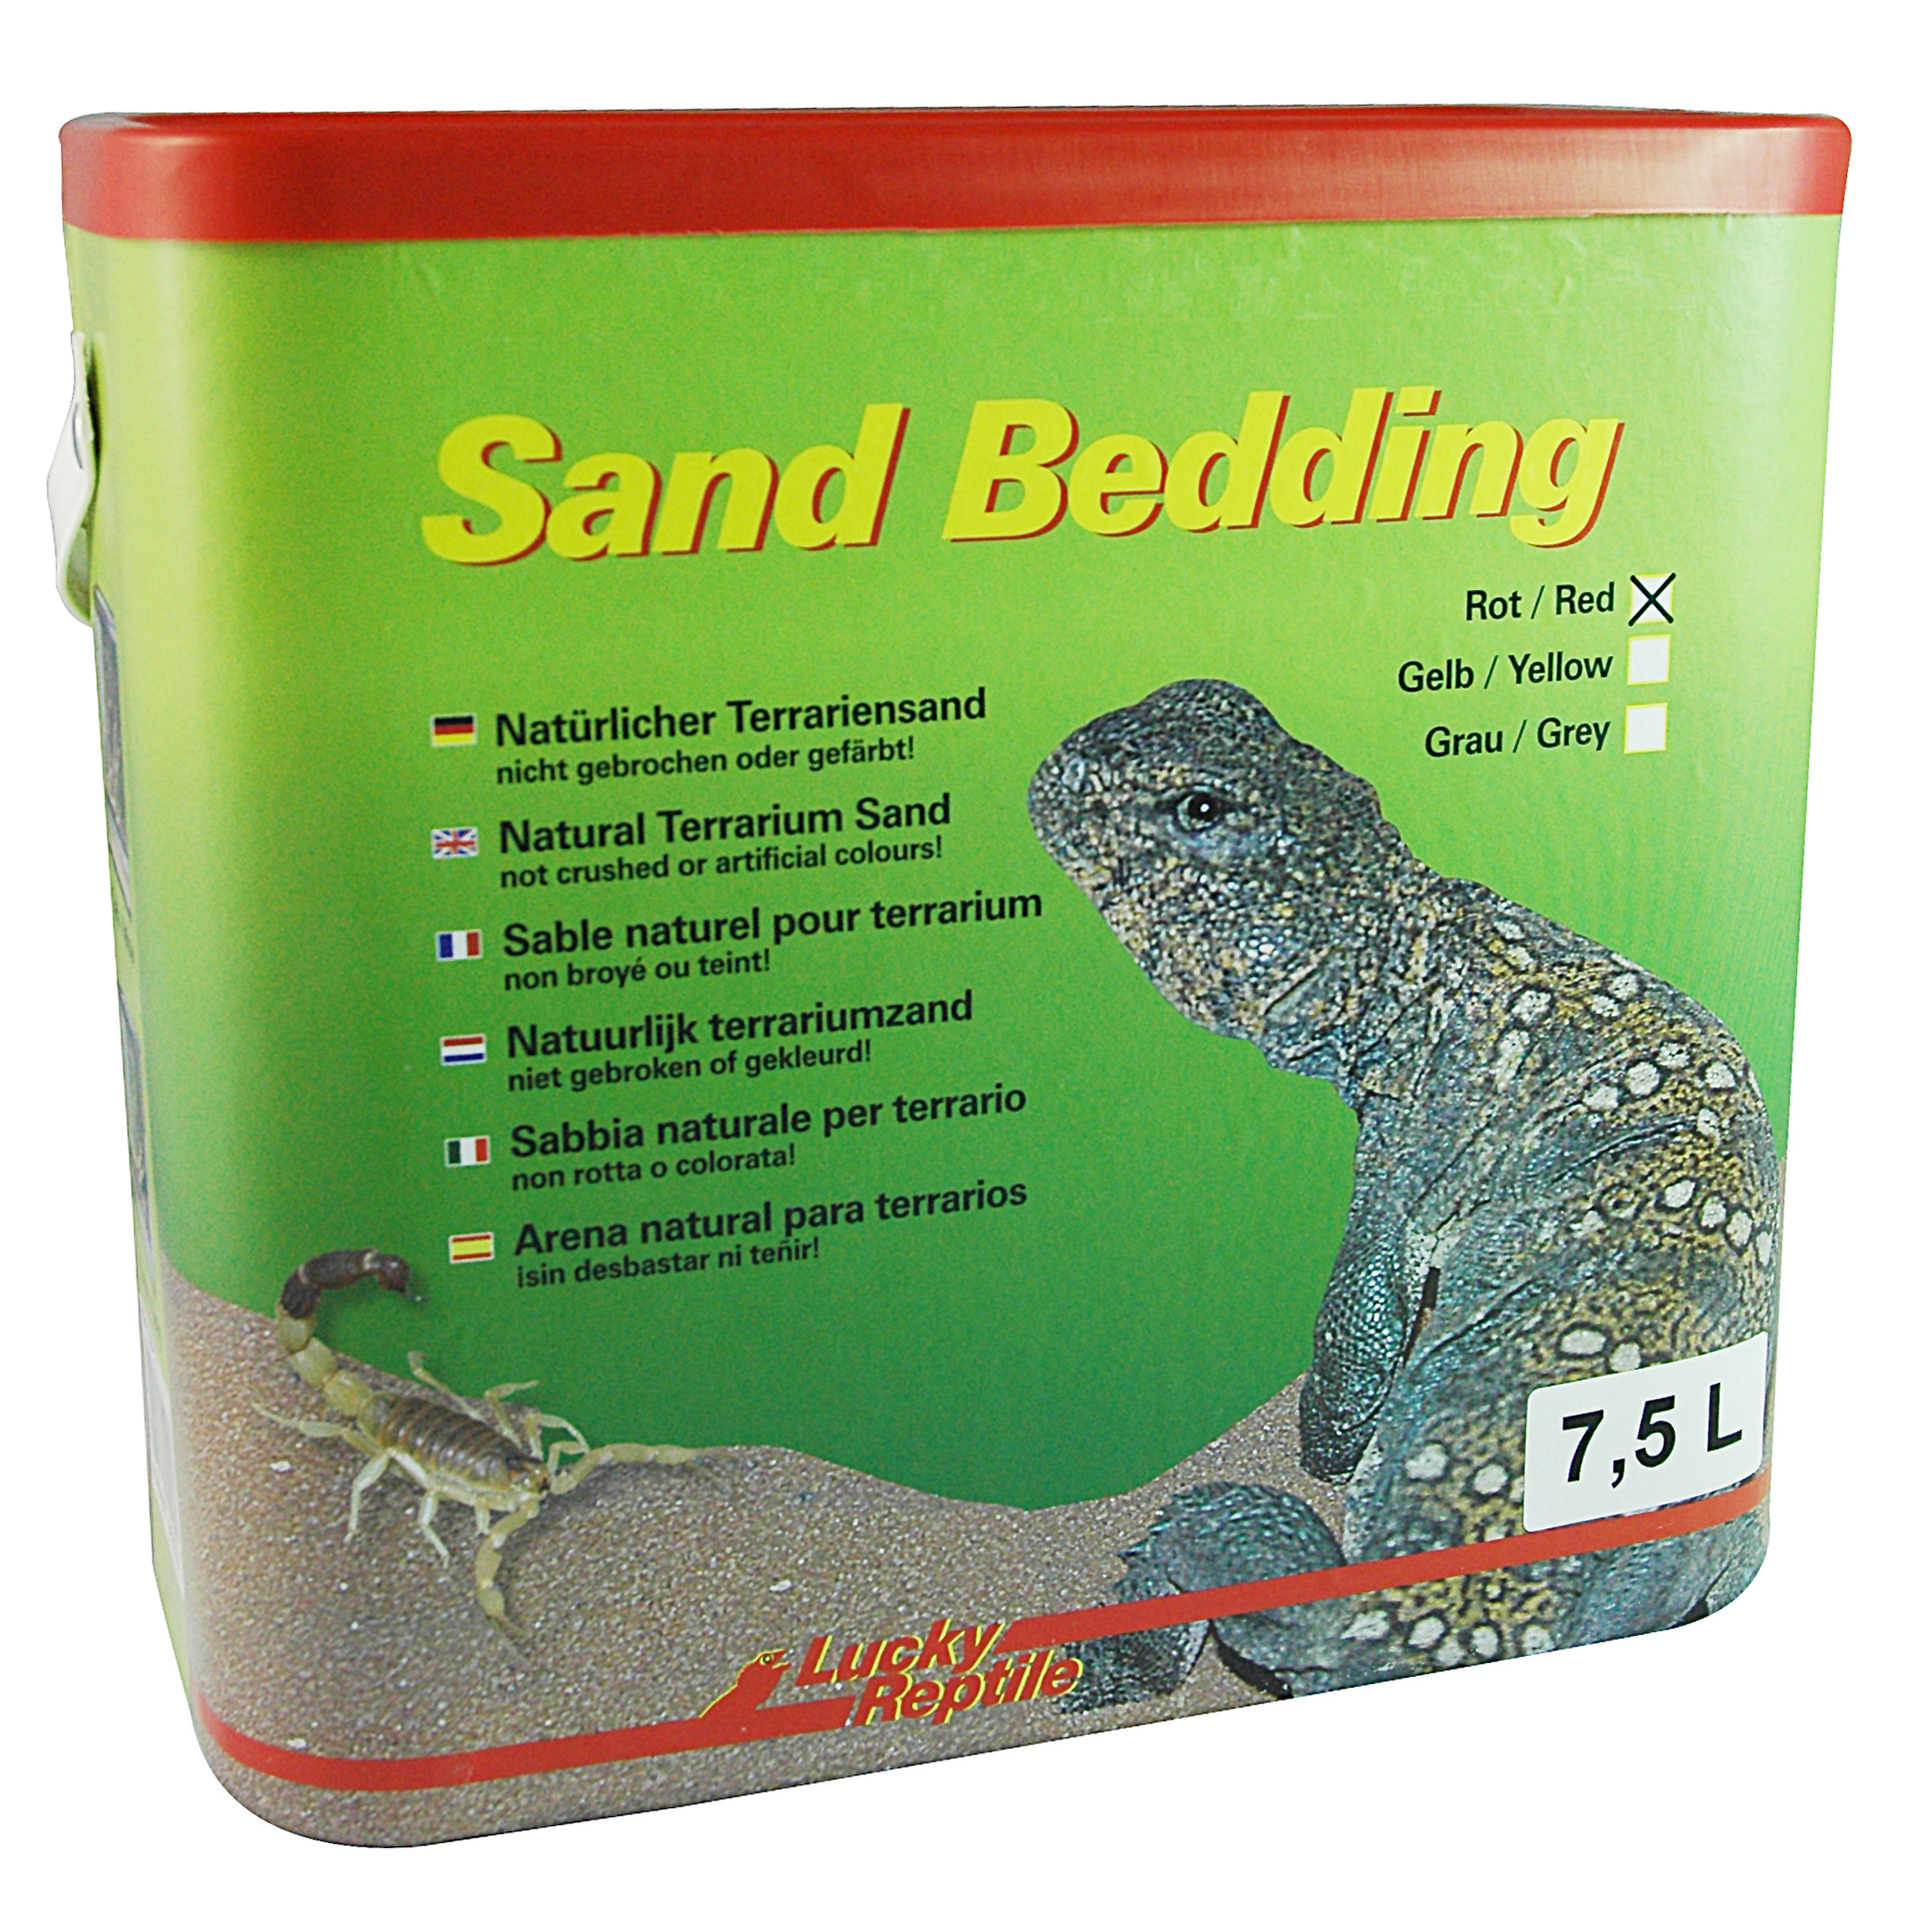 Import-Export Peter Hoch GmbH Sand Bedding